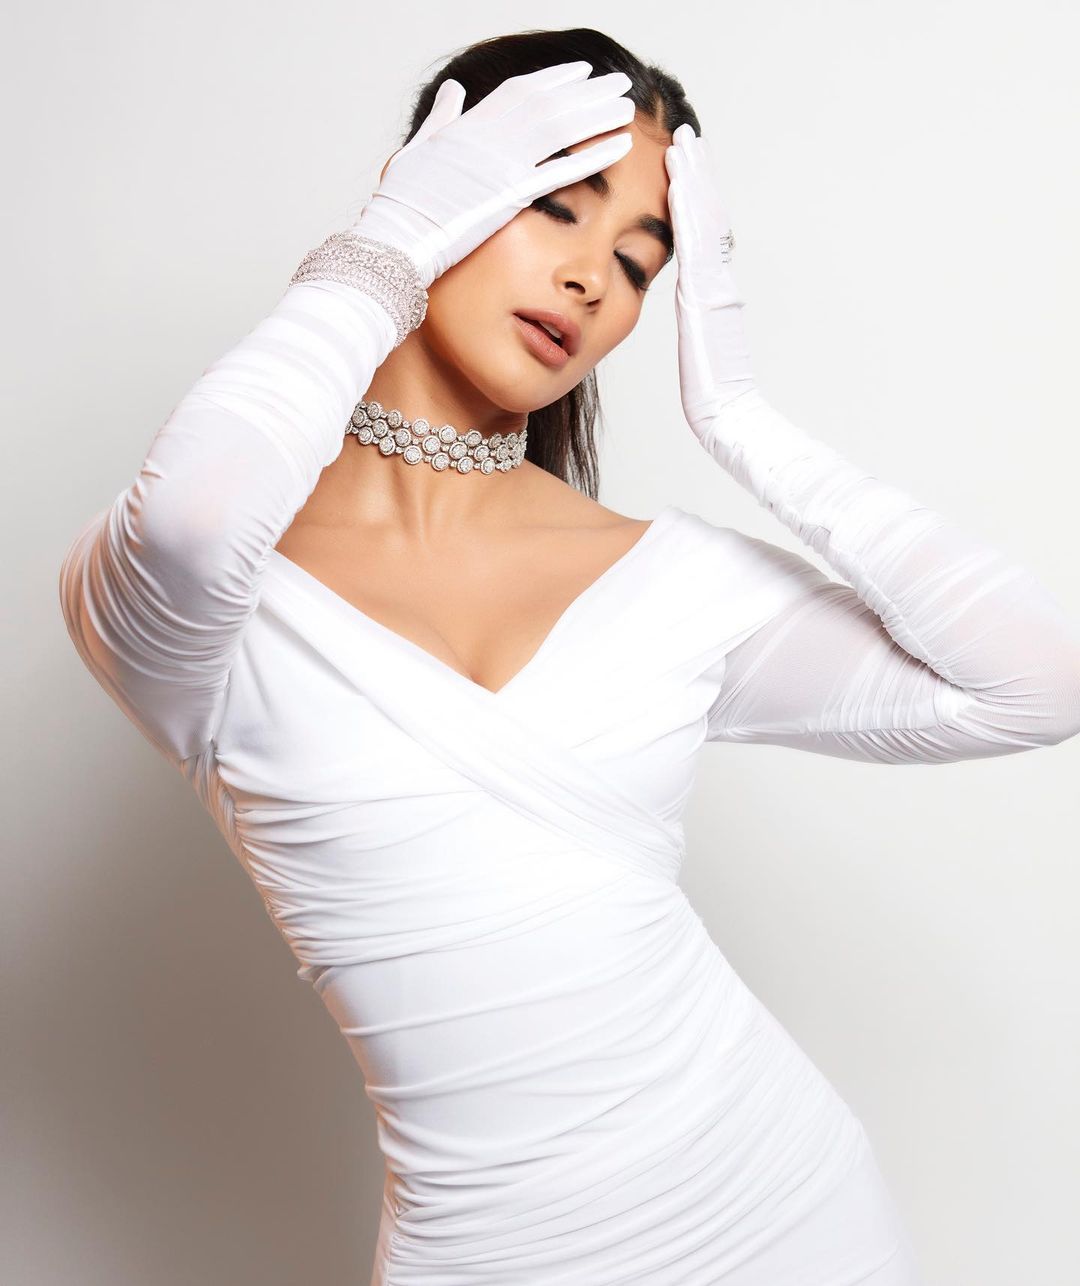 pooja-hegde-gorgeous-looks-in-white-dress